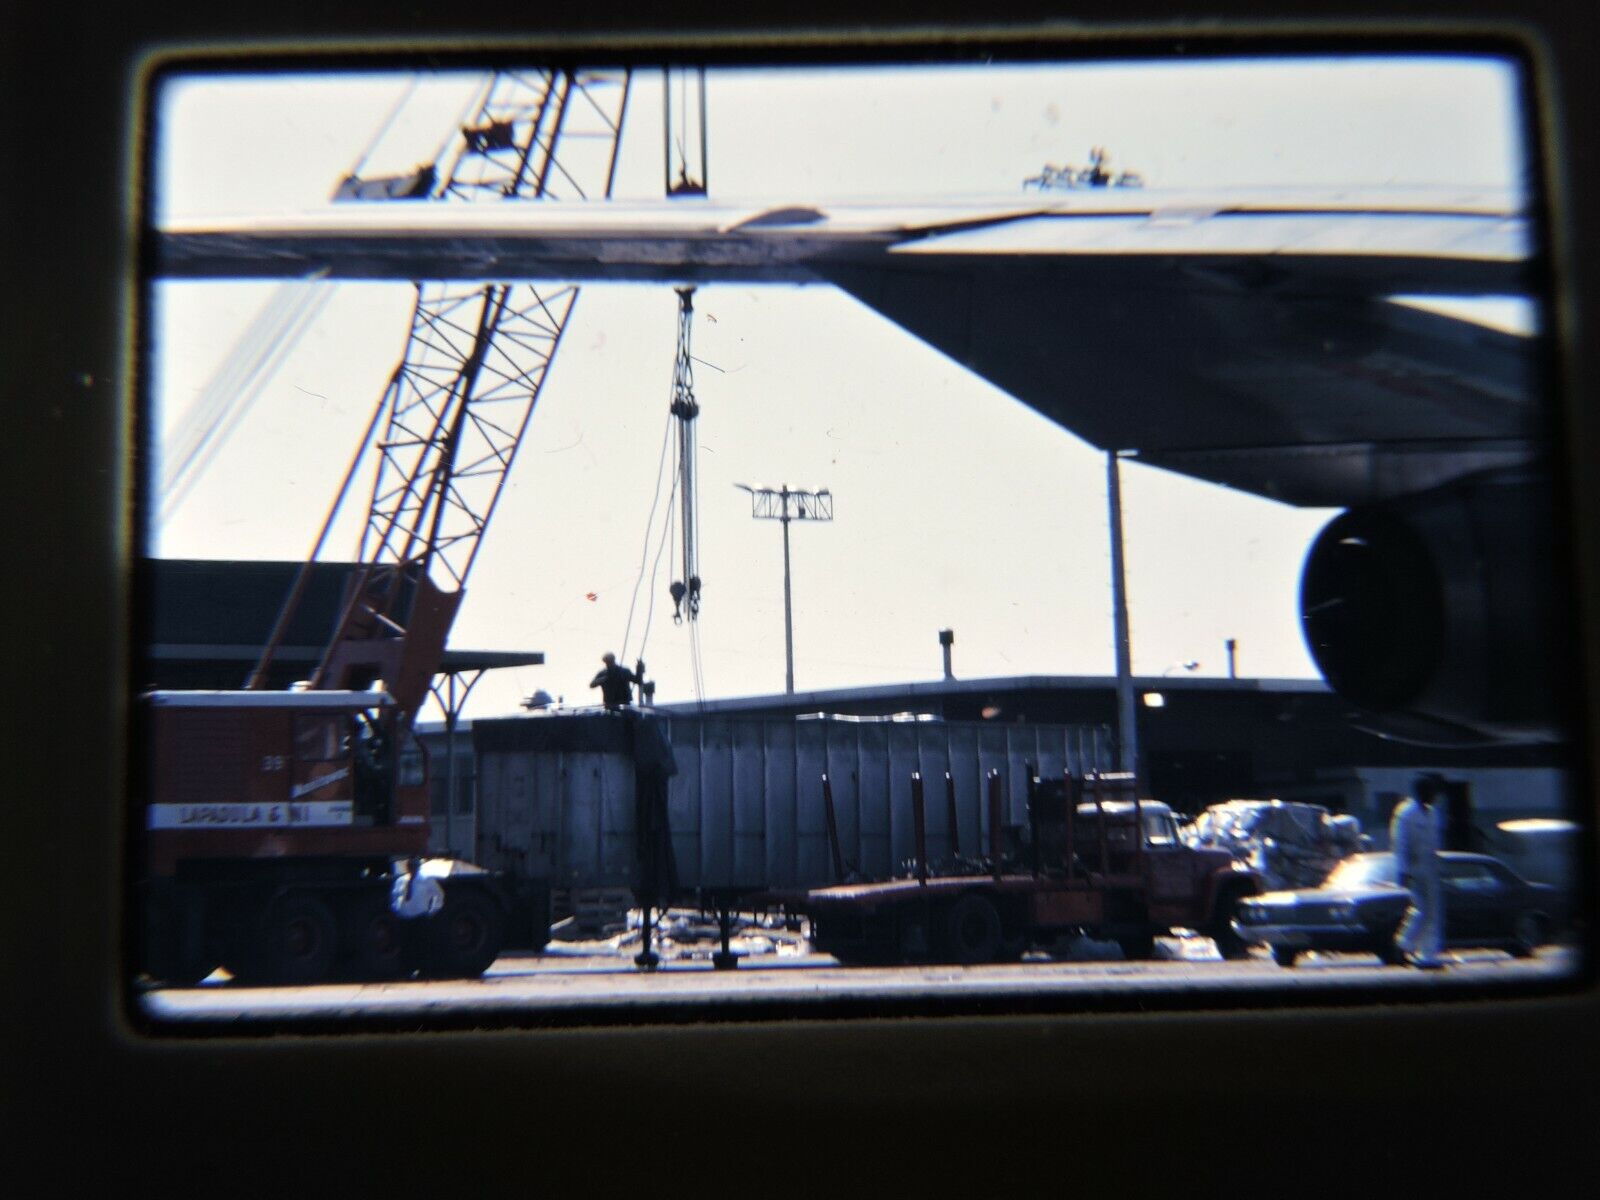 Orig 1971 Alitalia Cargo JFK Loading Cargo Aviation 35mm Kodachrome Photo Slide